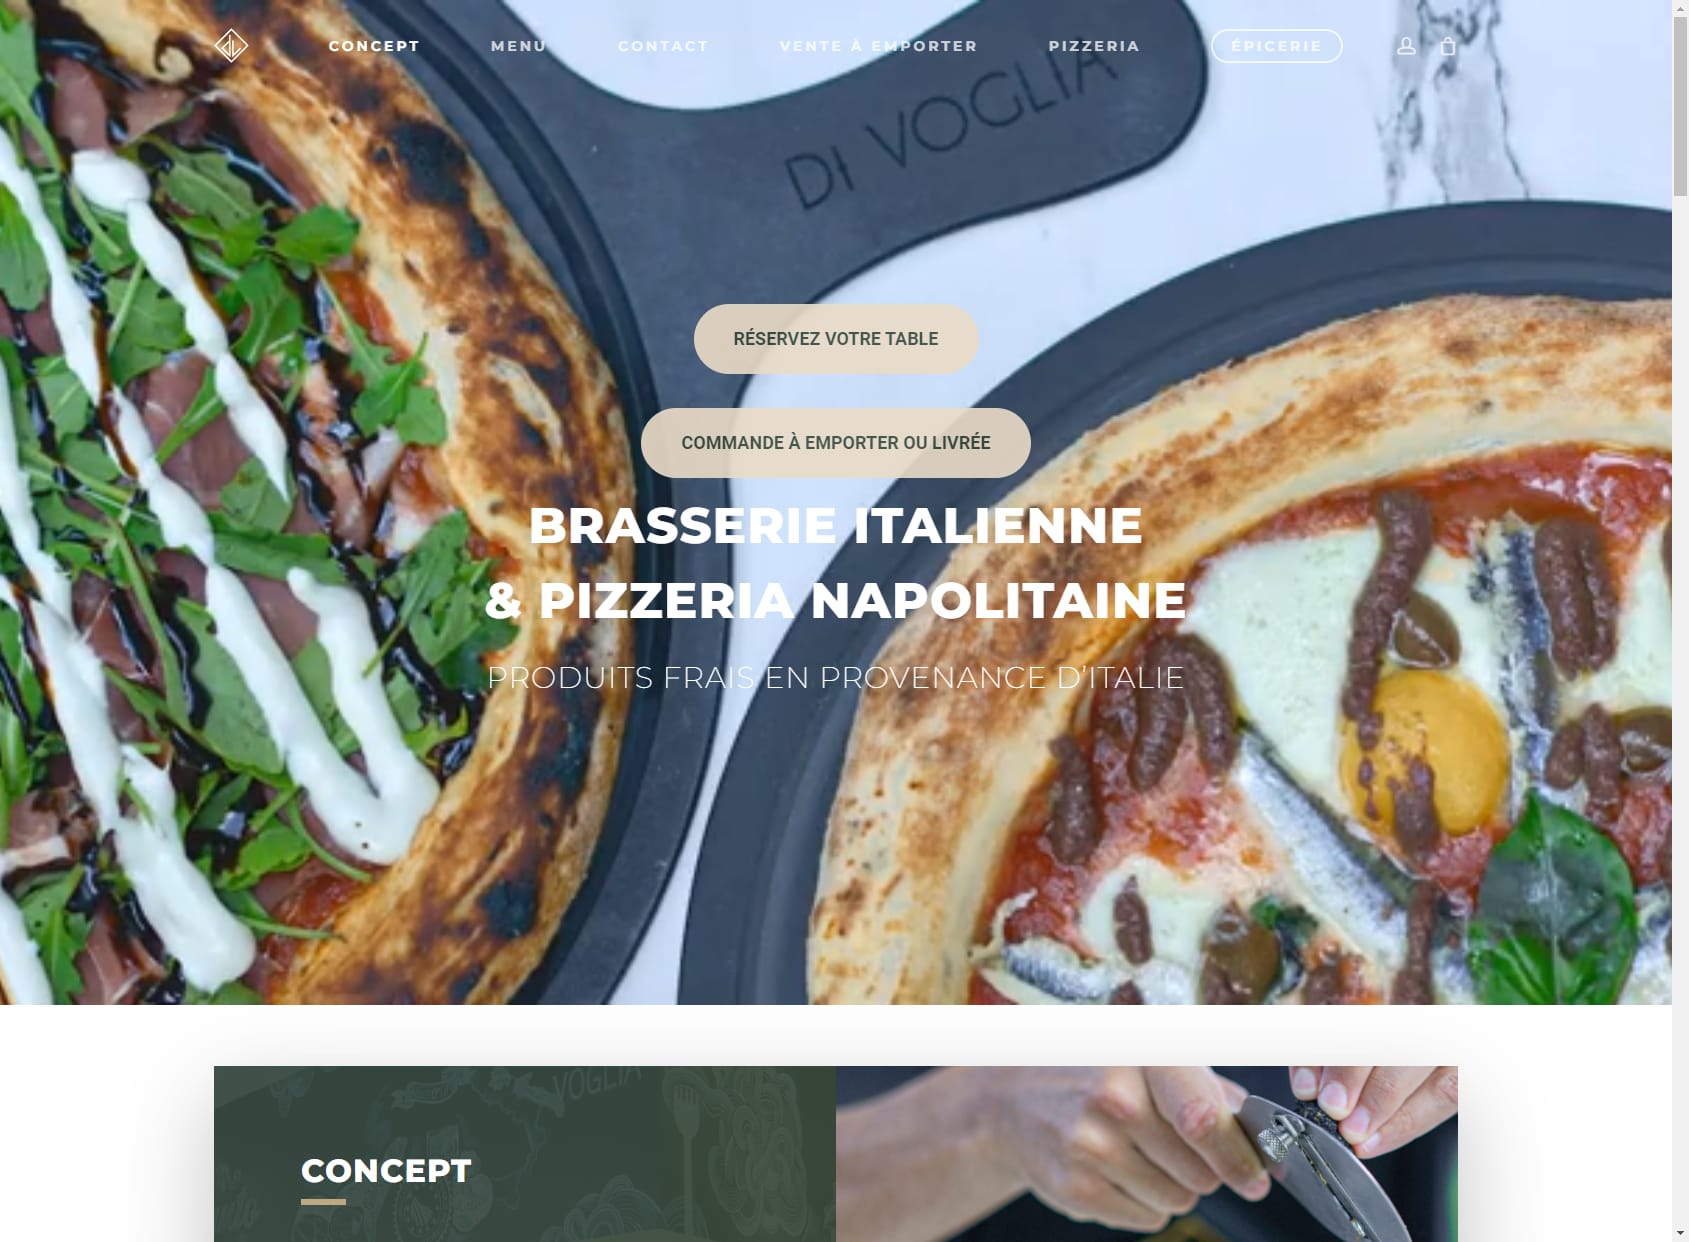 Di Voglia JEAN-JAURÈS - Brasserie Italienne & Pizzéria Napolitaine